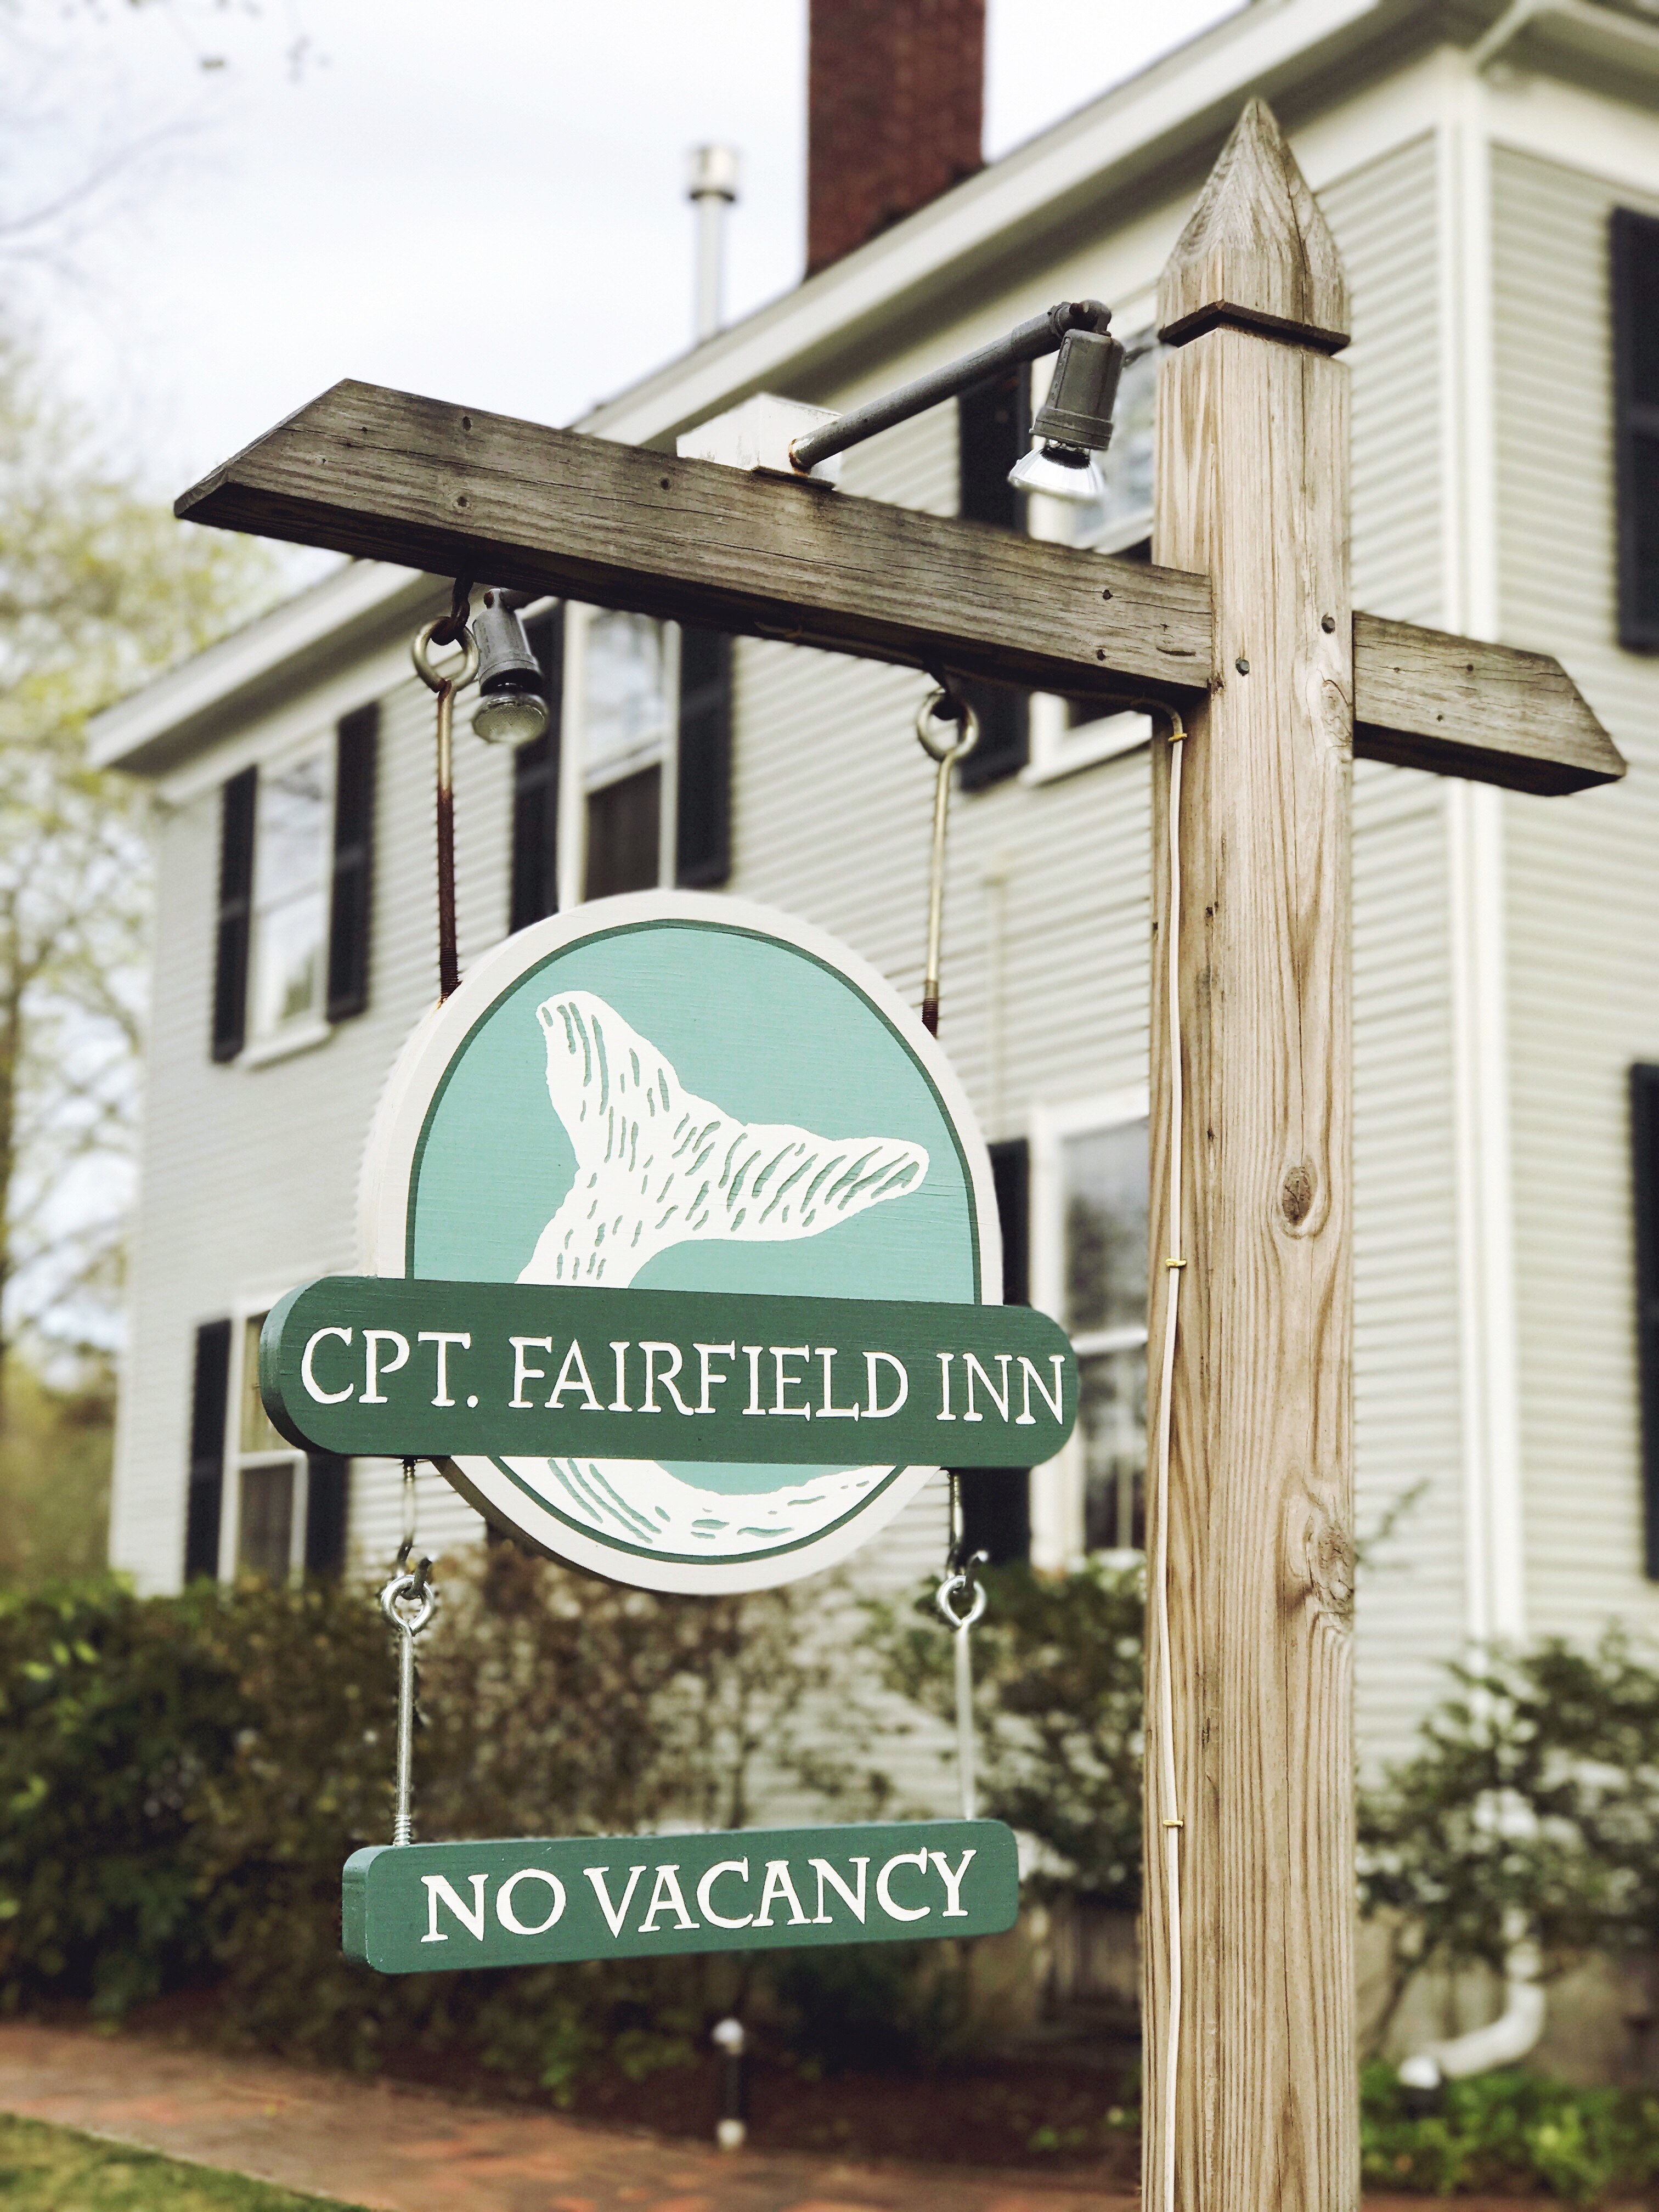 Captain Fairfield Inn - Kennebunkport, Maine